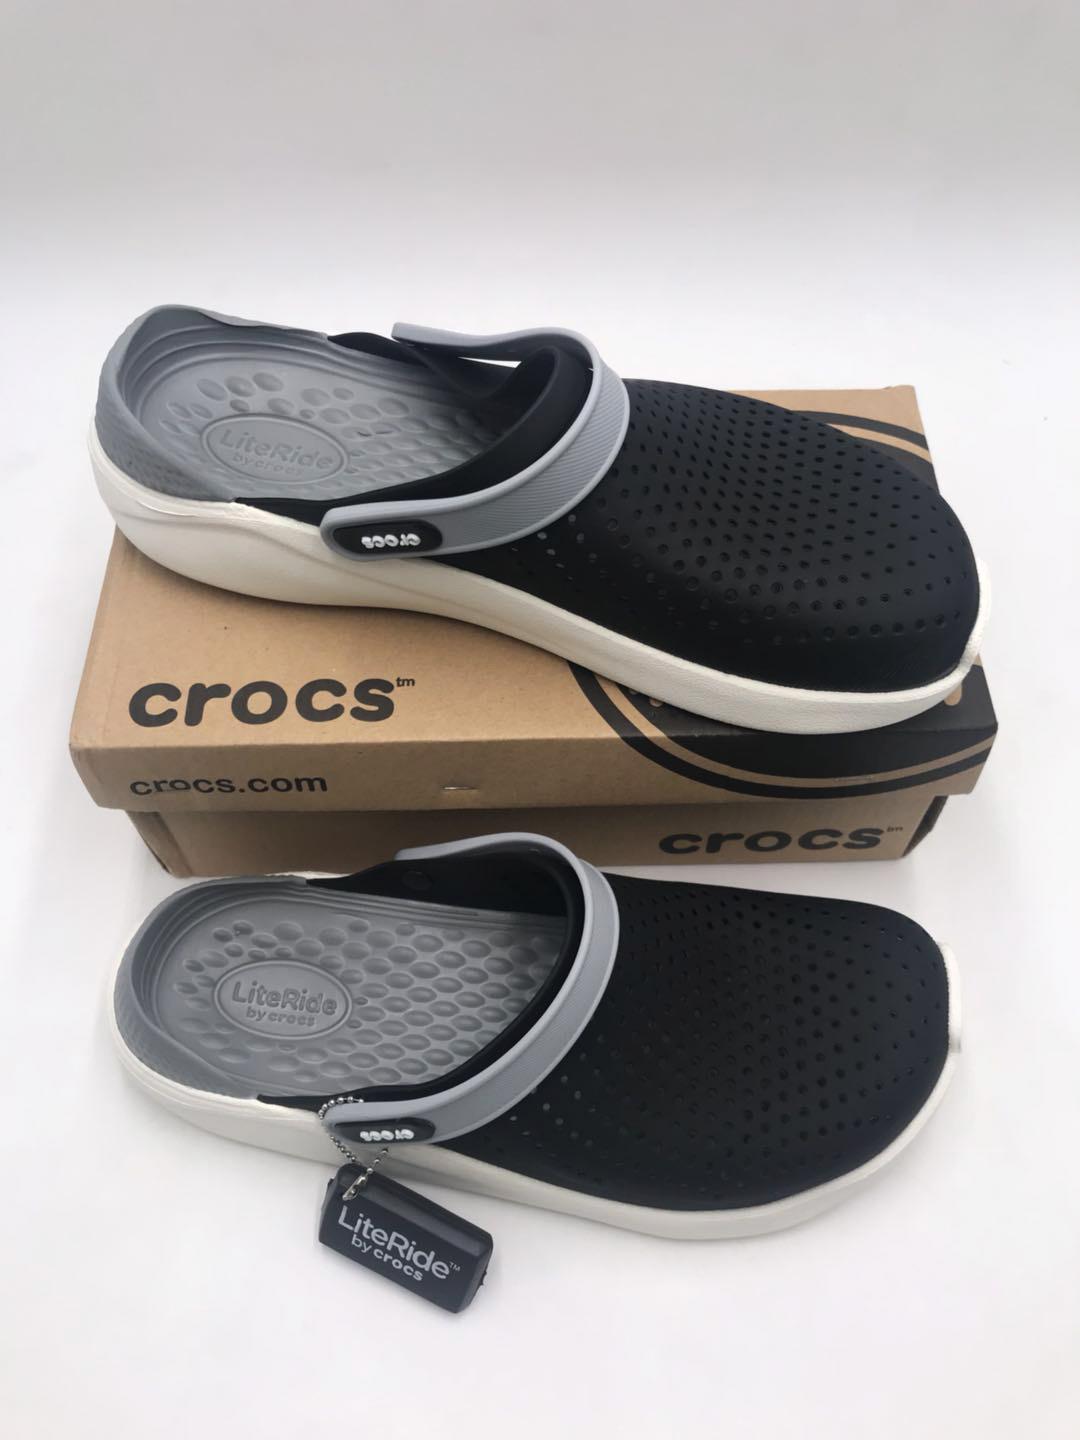 crocs for men 2019